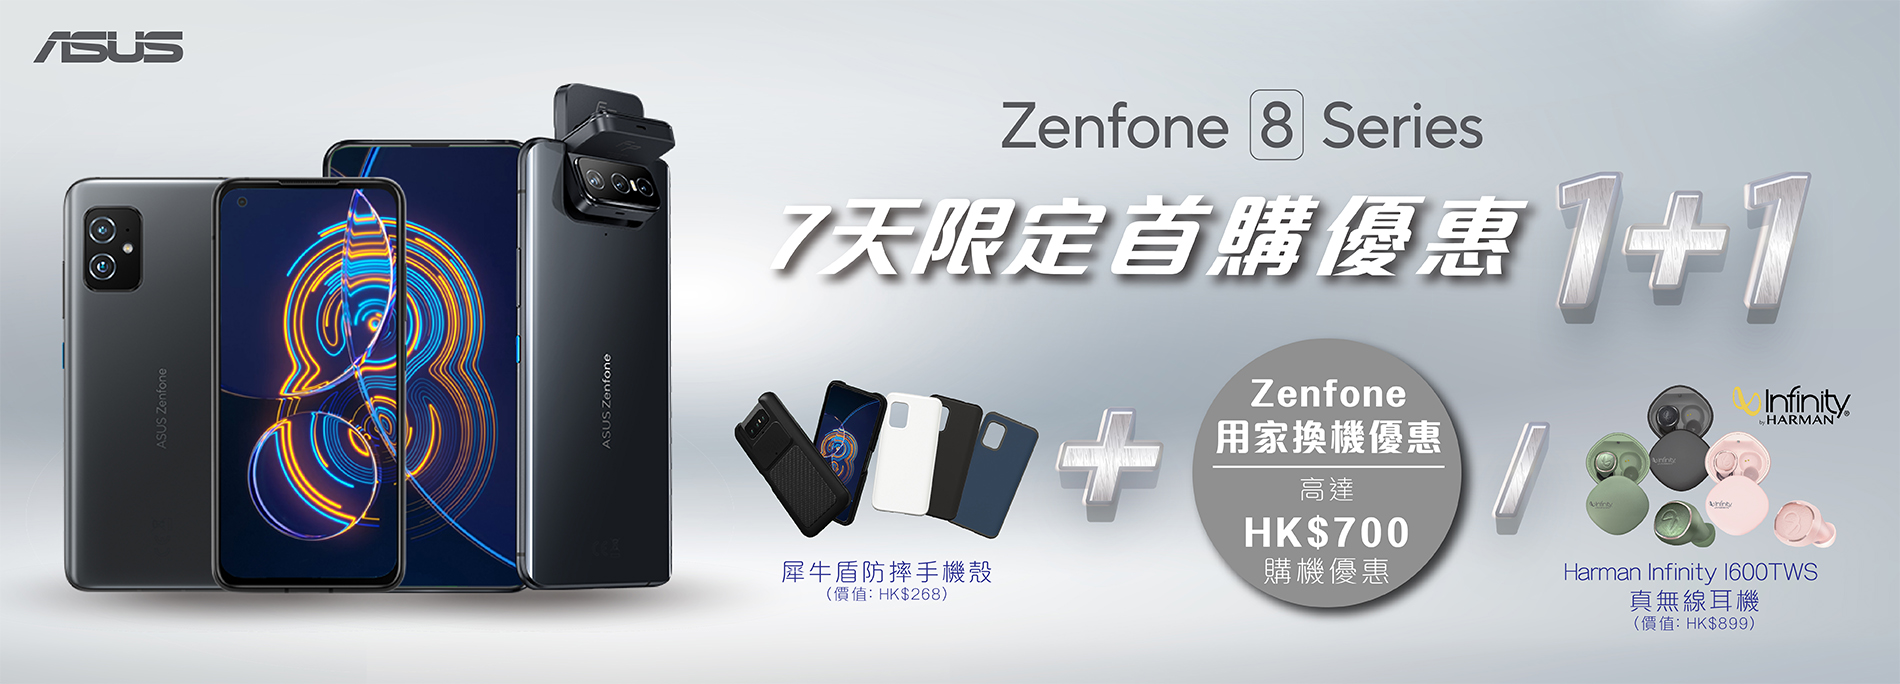 【Zenfone 8 Series】七天限定首購優惠 1+1